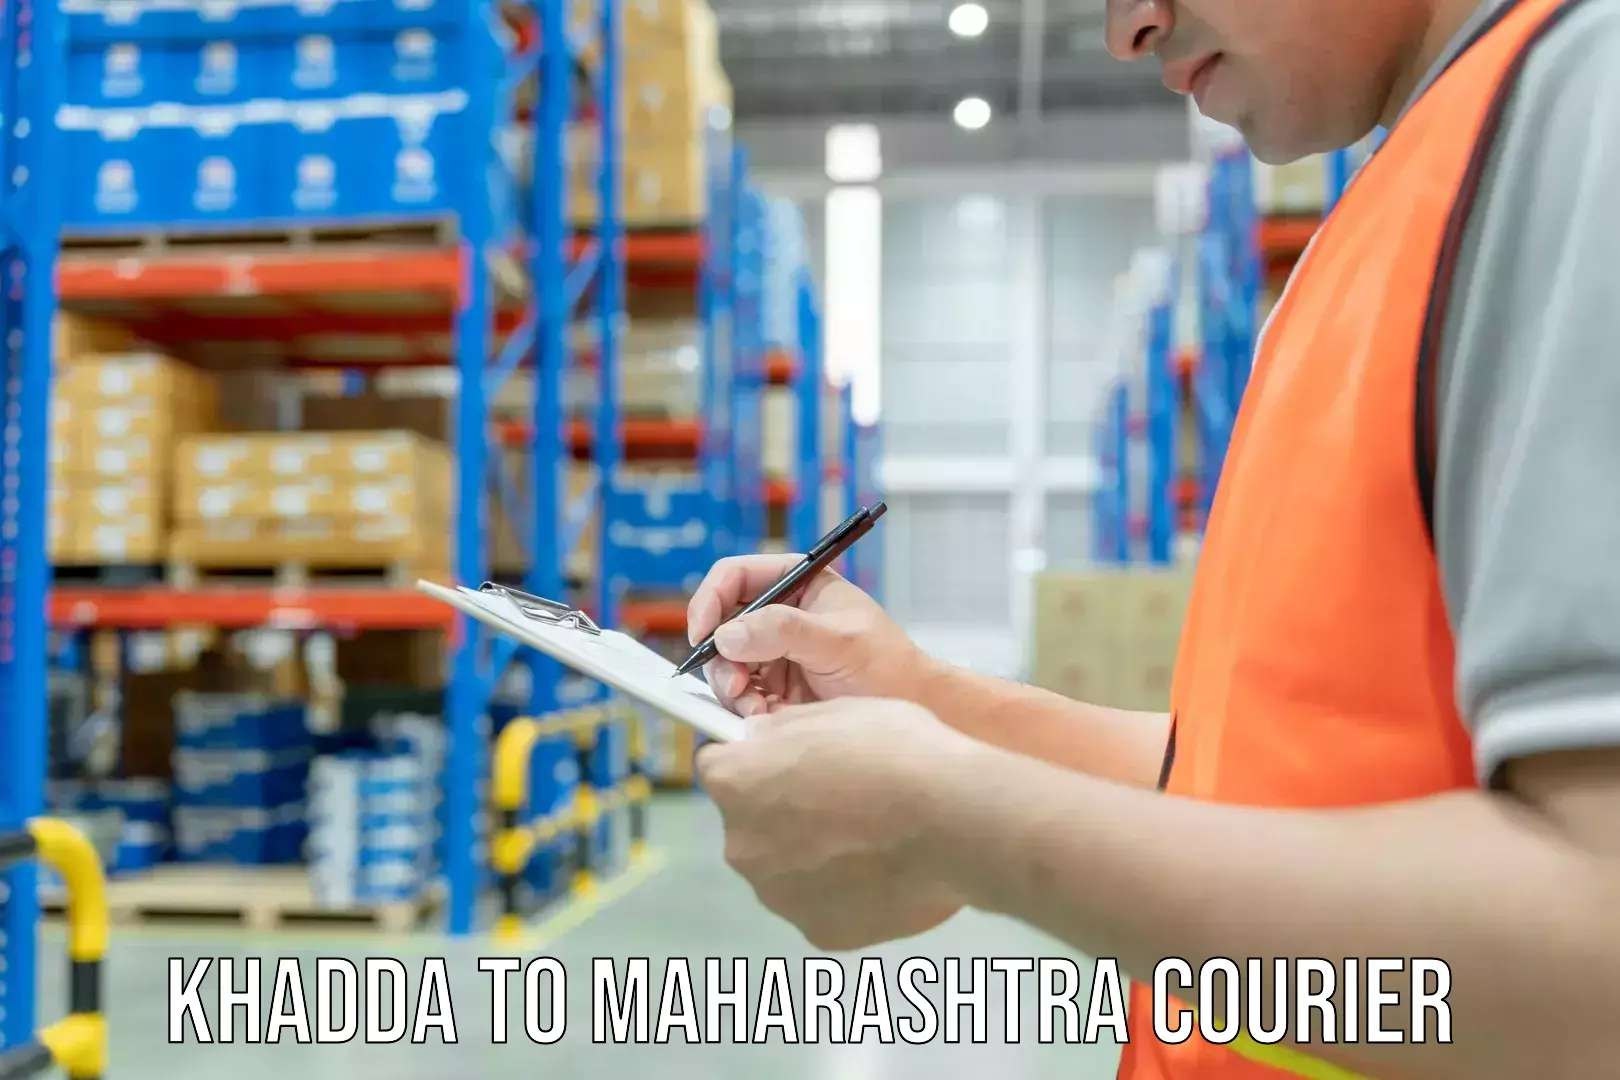 Professional packing services in Khadda to Maharashtra